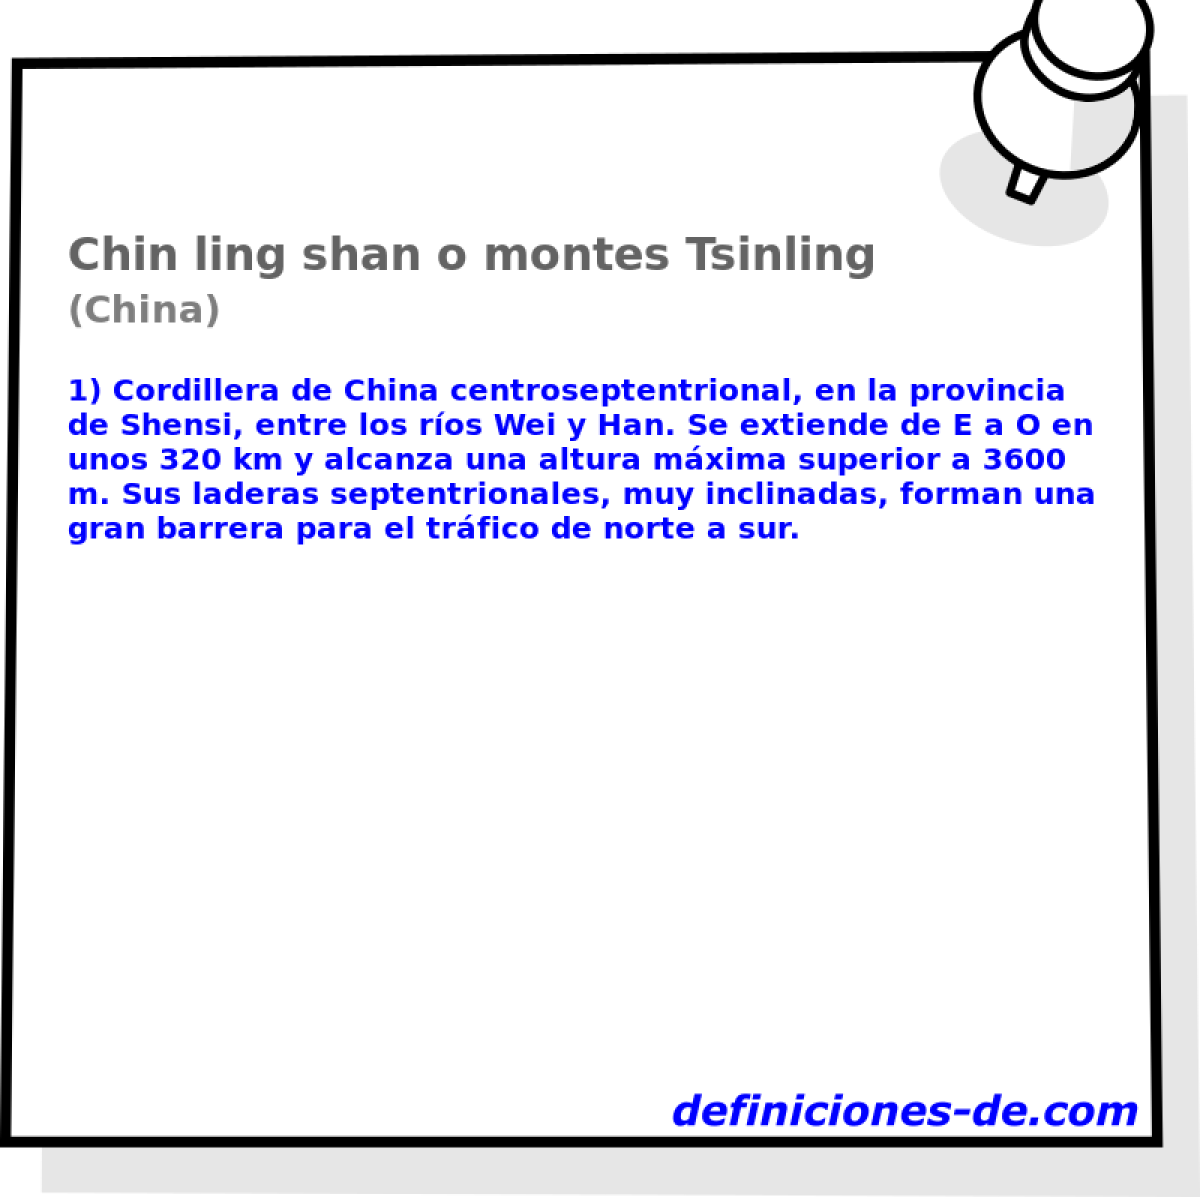 Chin ling shan o montes Tsinling (China)